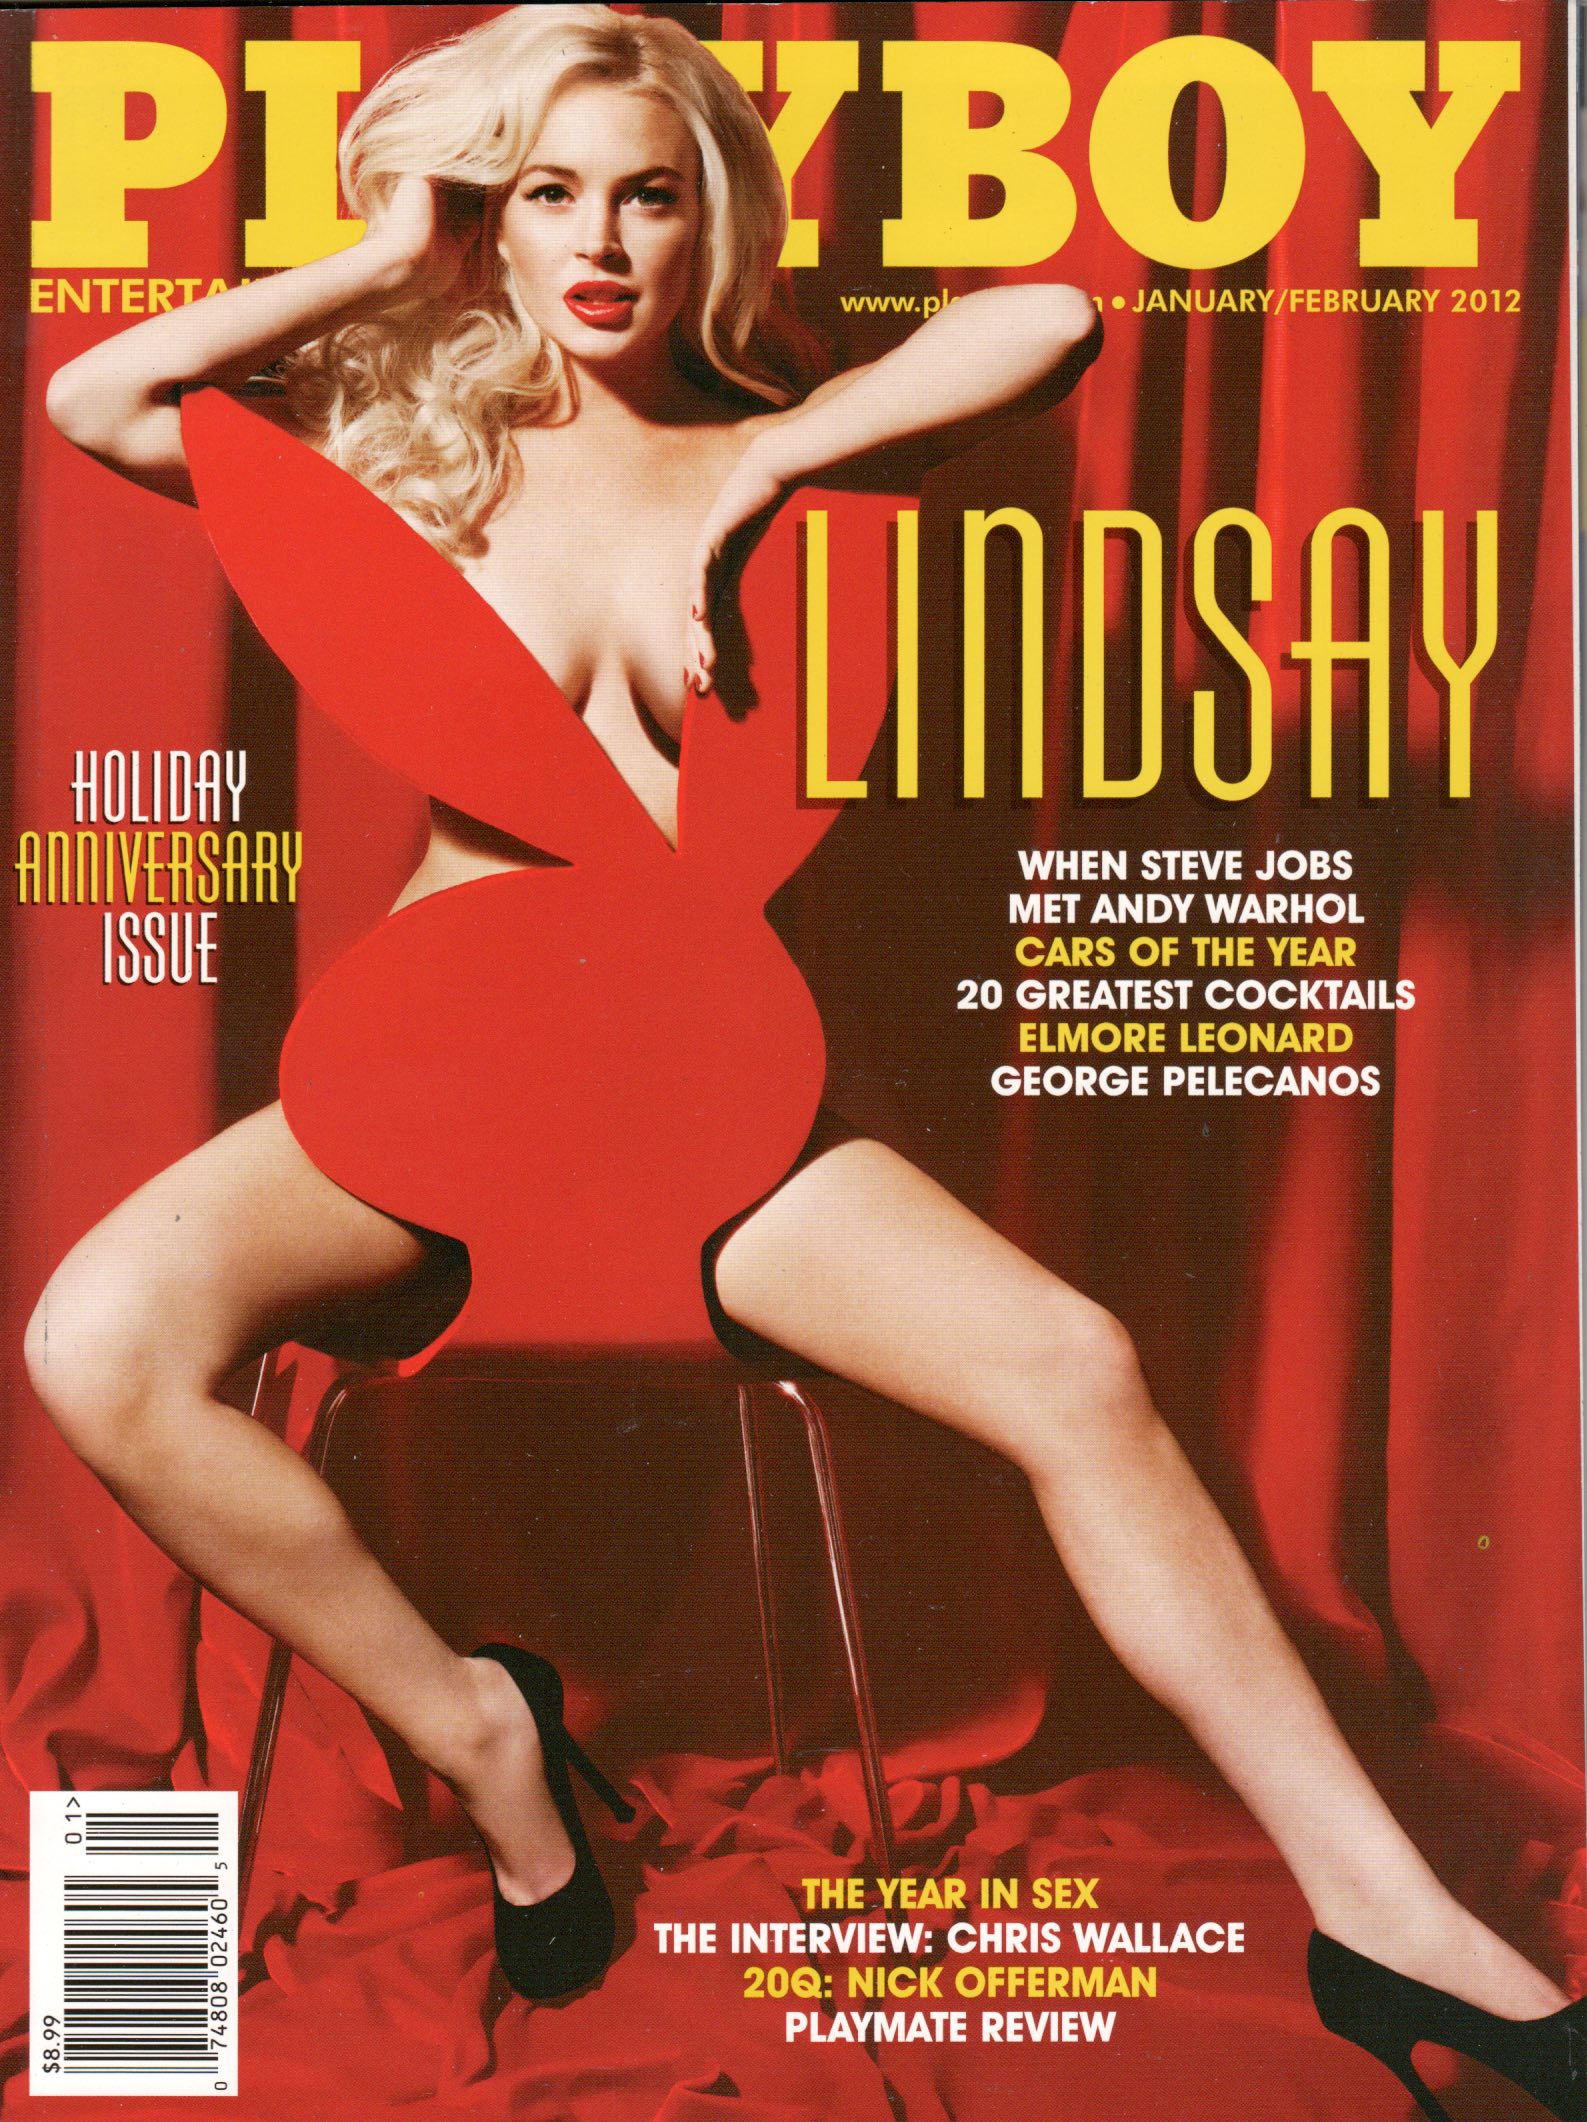 Playboy Magazine Holiday Anniversary Issue January/February 2012 Lindsay  Lohan | WEST COAST NEWSSTAND